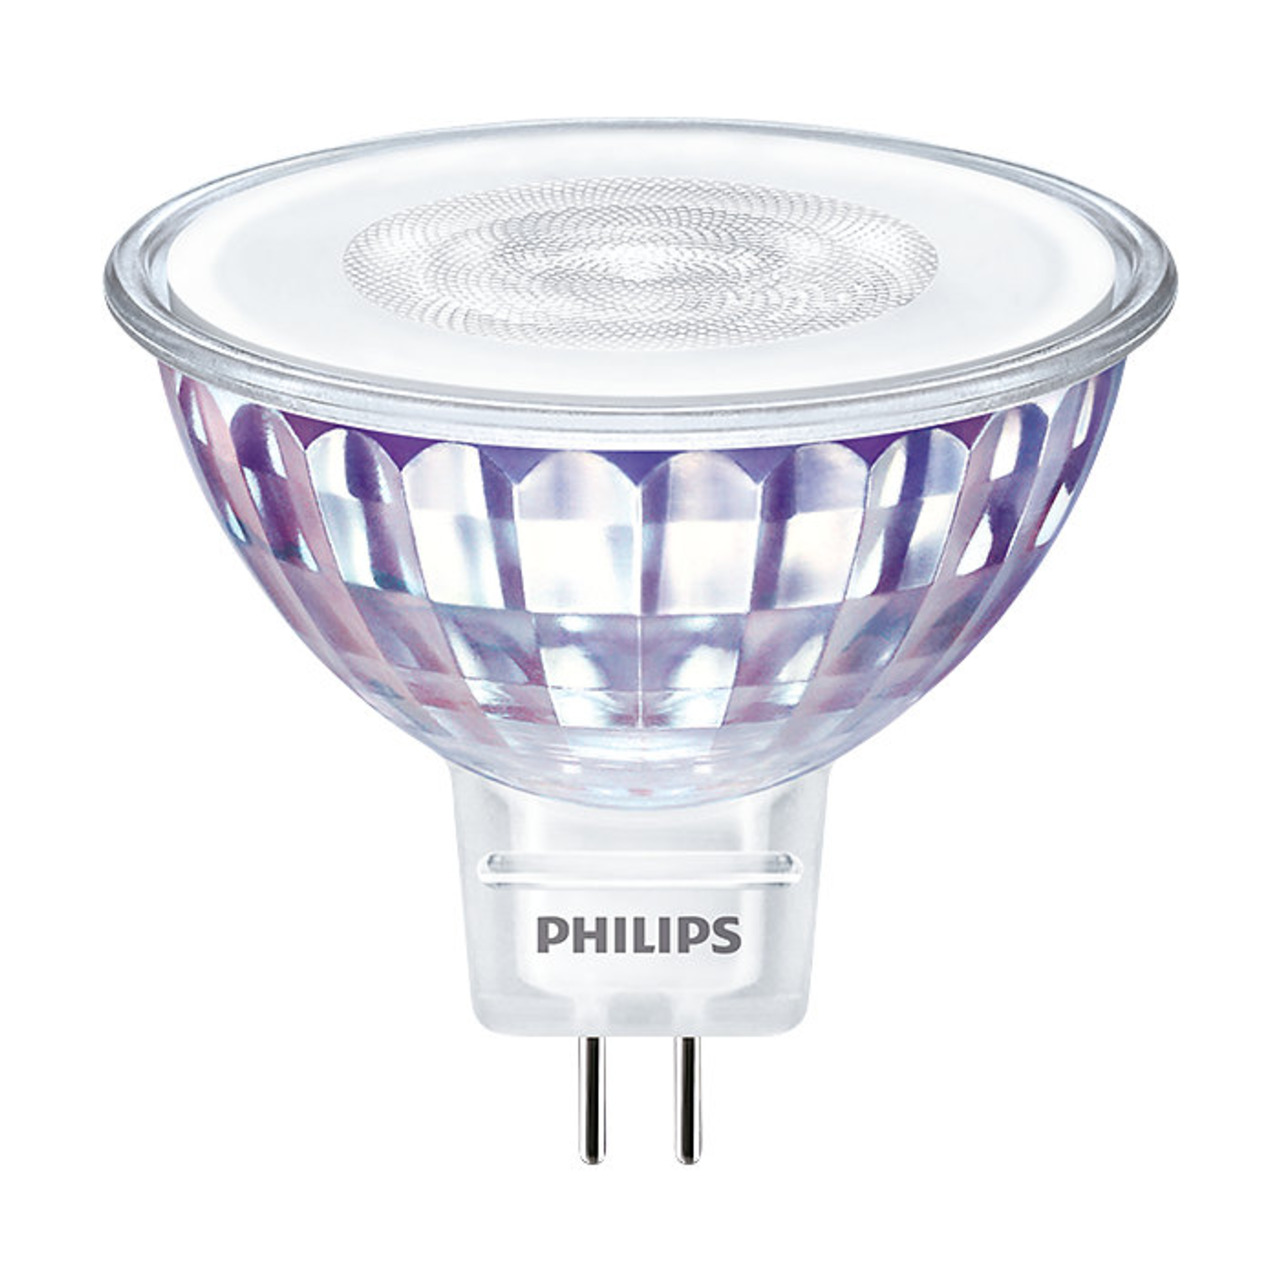 Philips 5-8-W-GU5-3-LED-Lampe Master LEDspot Value- MR16- 450 lm- warmweiss (2700 K)- 60- dimmbar unter Beleuchtung